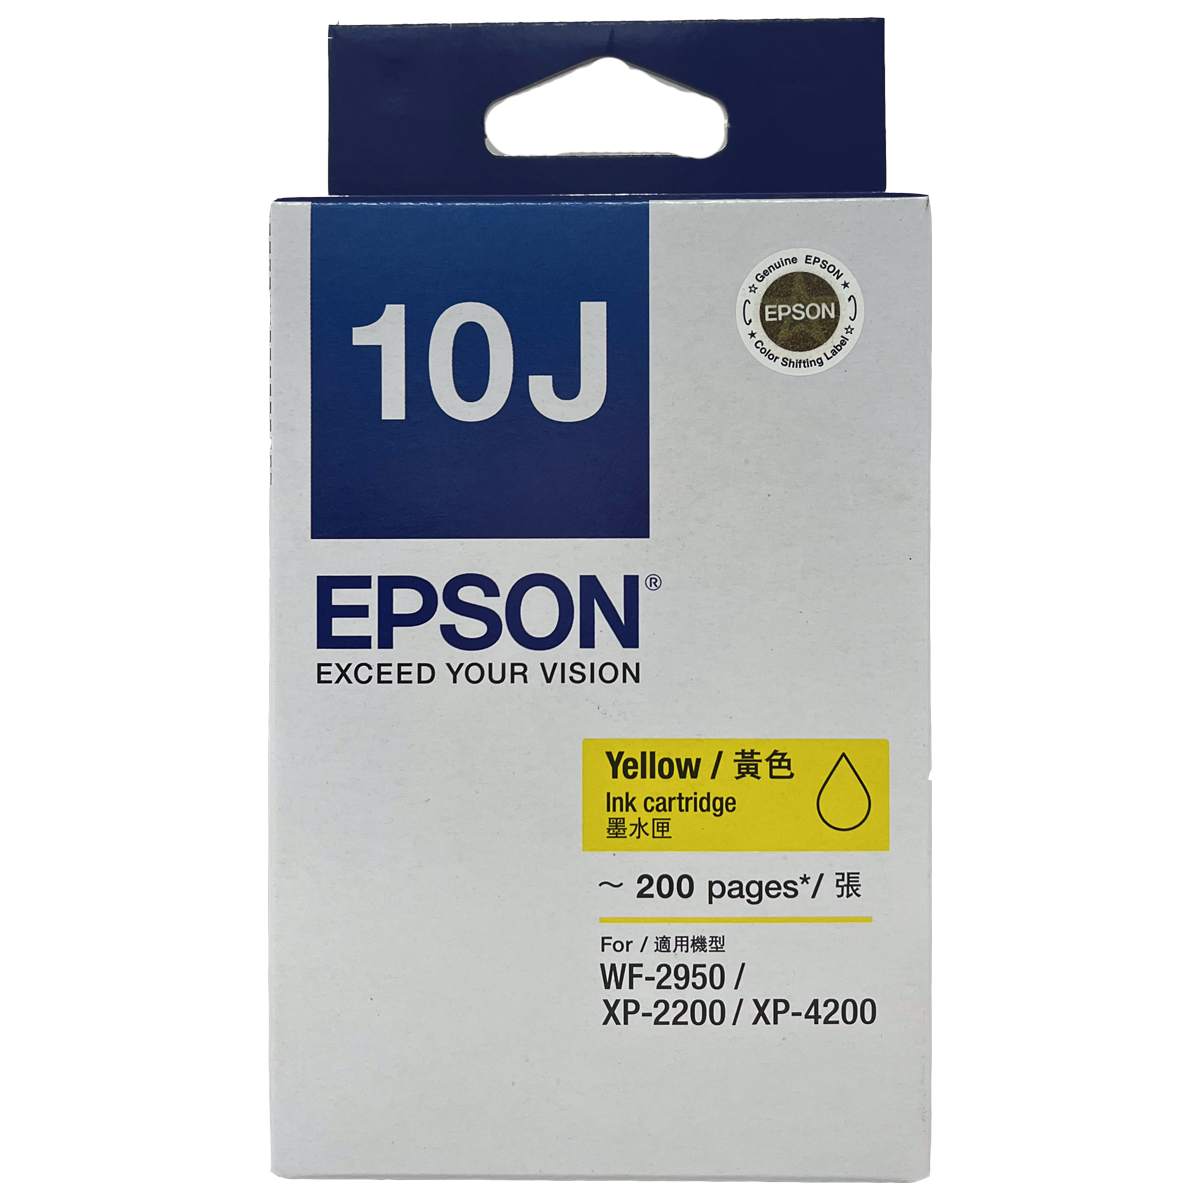 Epson 10J Yellow Ink Cartridge #C13T10J483